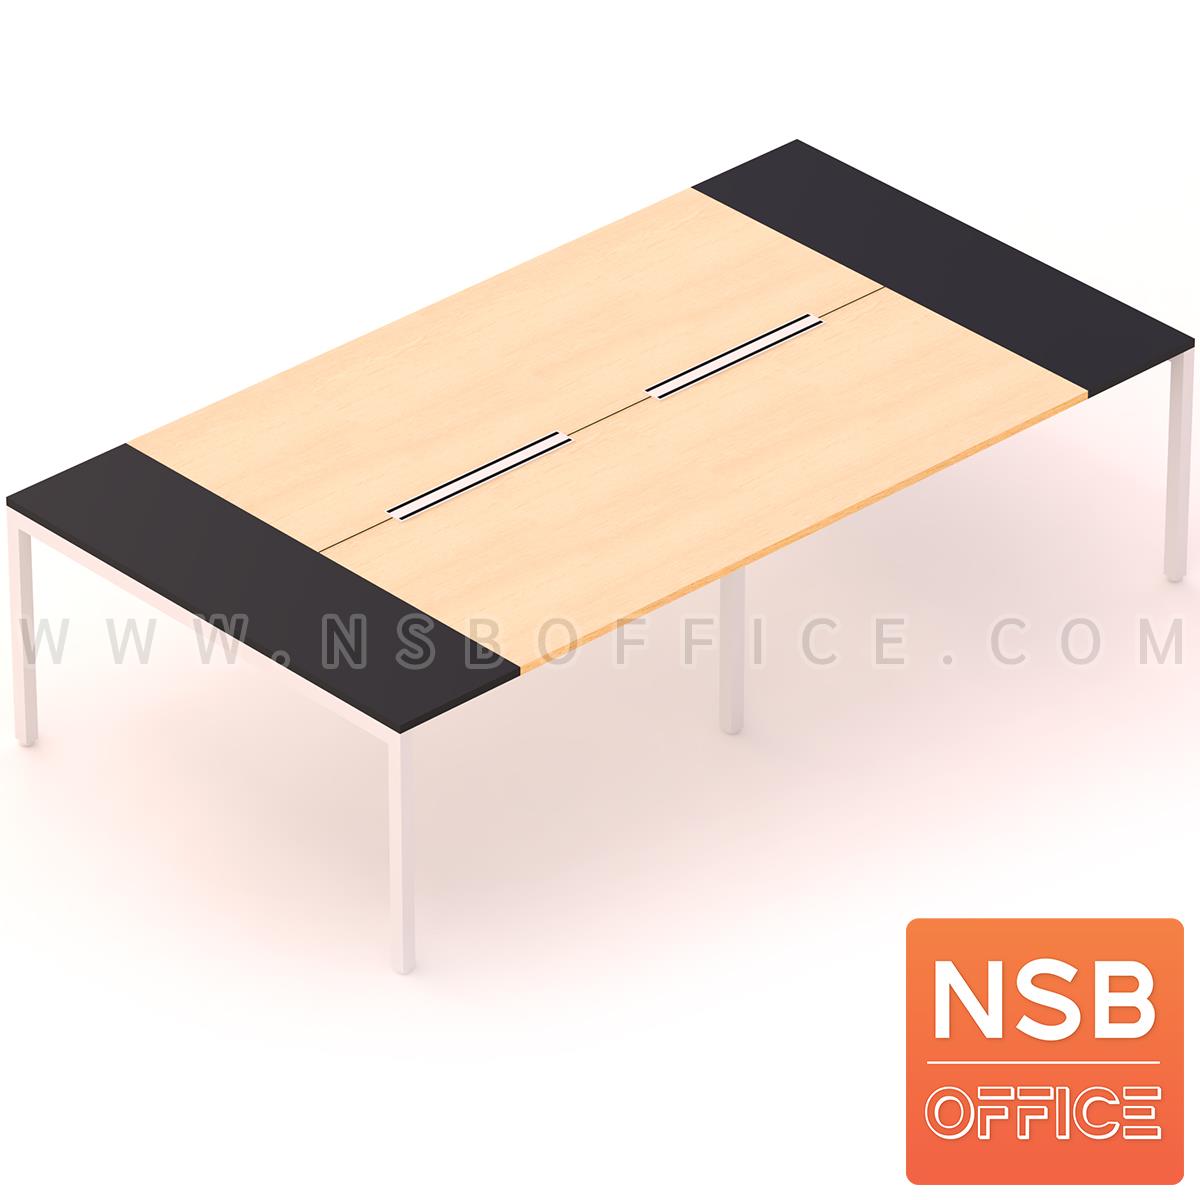 A05A176:โต๊ะประชุมทรงสี่เหลี่ยม 150D cm. รุ่น NSB-SQ15  พร้อมรางไฟแบบสองทาง รหัส A24A006